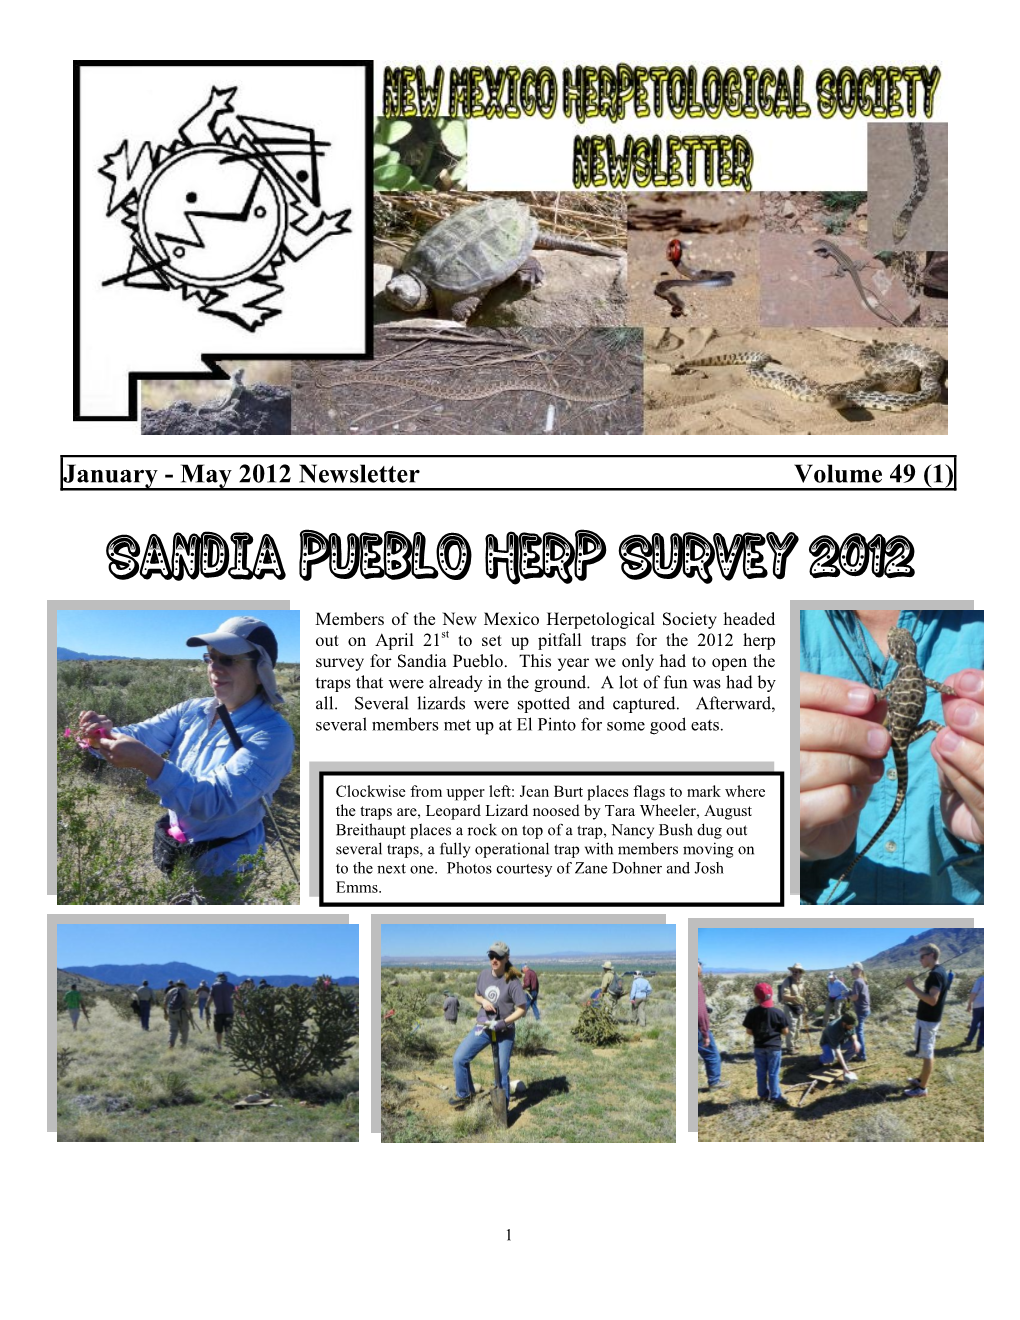 Sandia Pueblo Herp Survey 2012